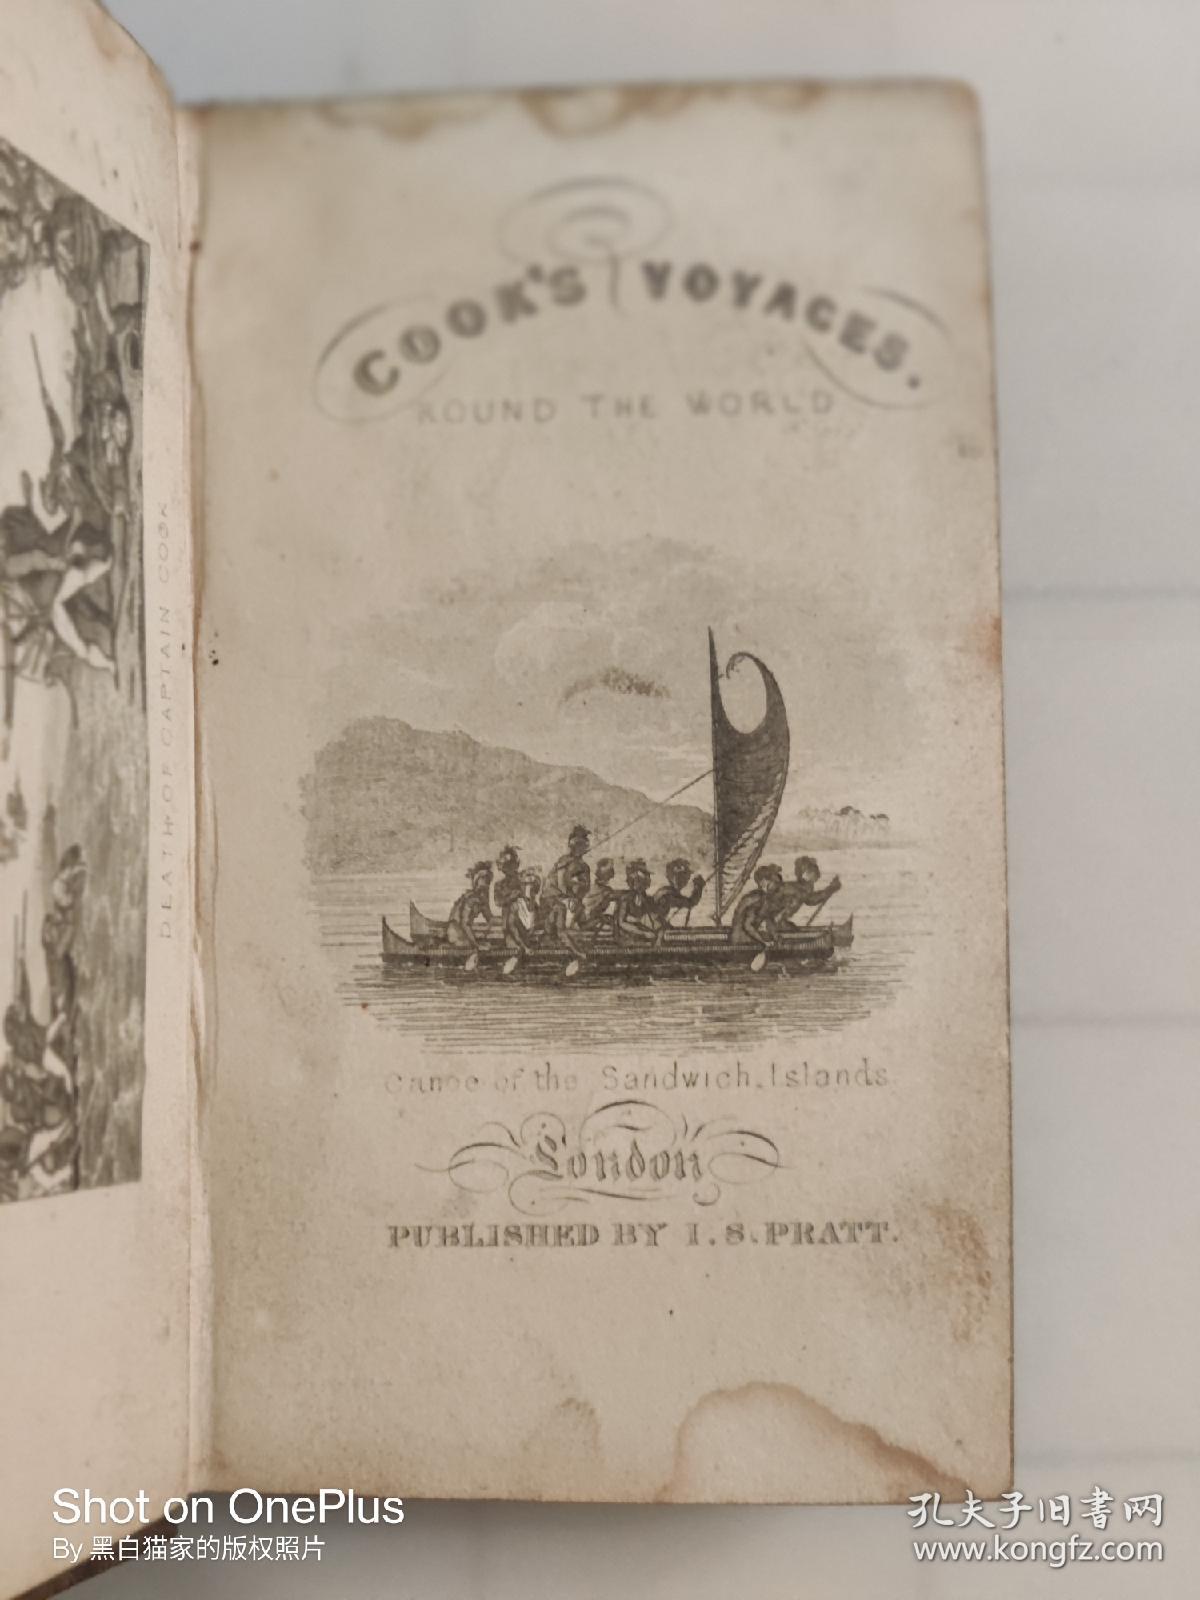 《Narrative on Captain JAMES COOK's voyages around the world》published by I.S.Pratt London,1843年，精装巾箱本，游记，詹姆斯库克船长